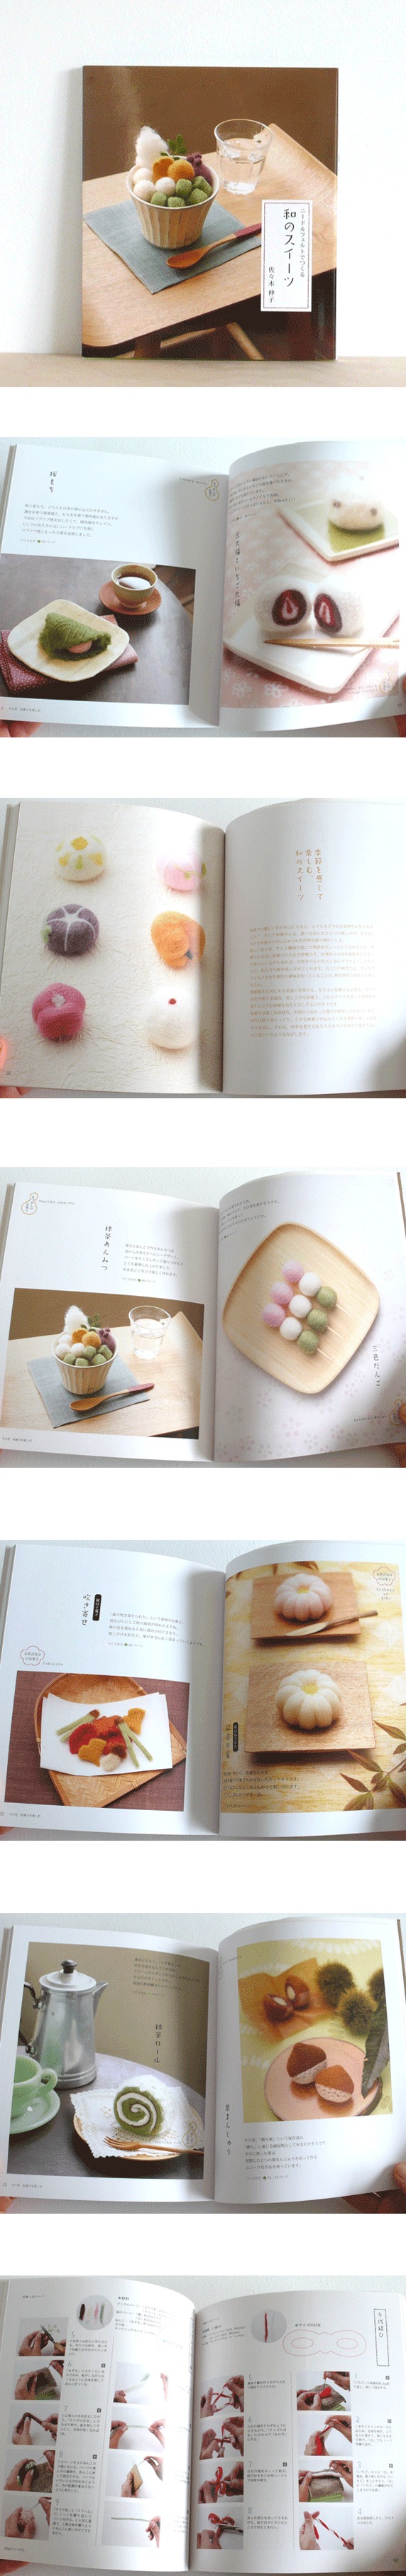 sasaki nobuko master needle felt wool sweets [beautiful craft book, unusual felt craft, unique felt projects]